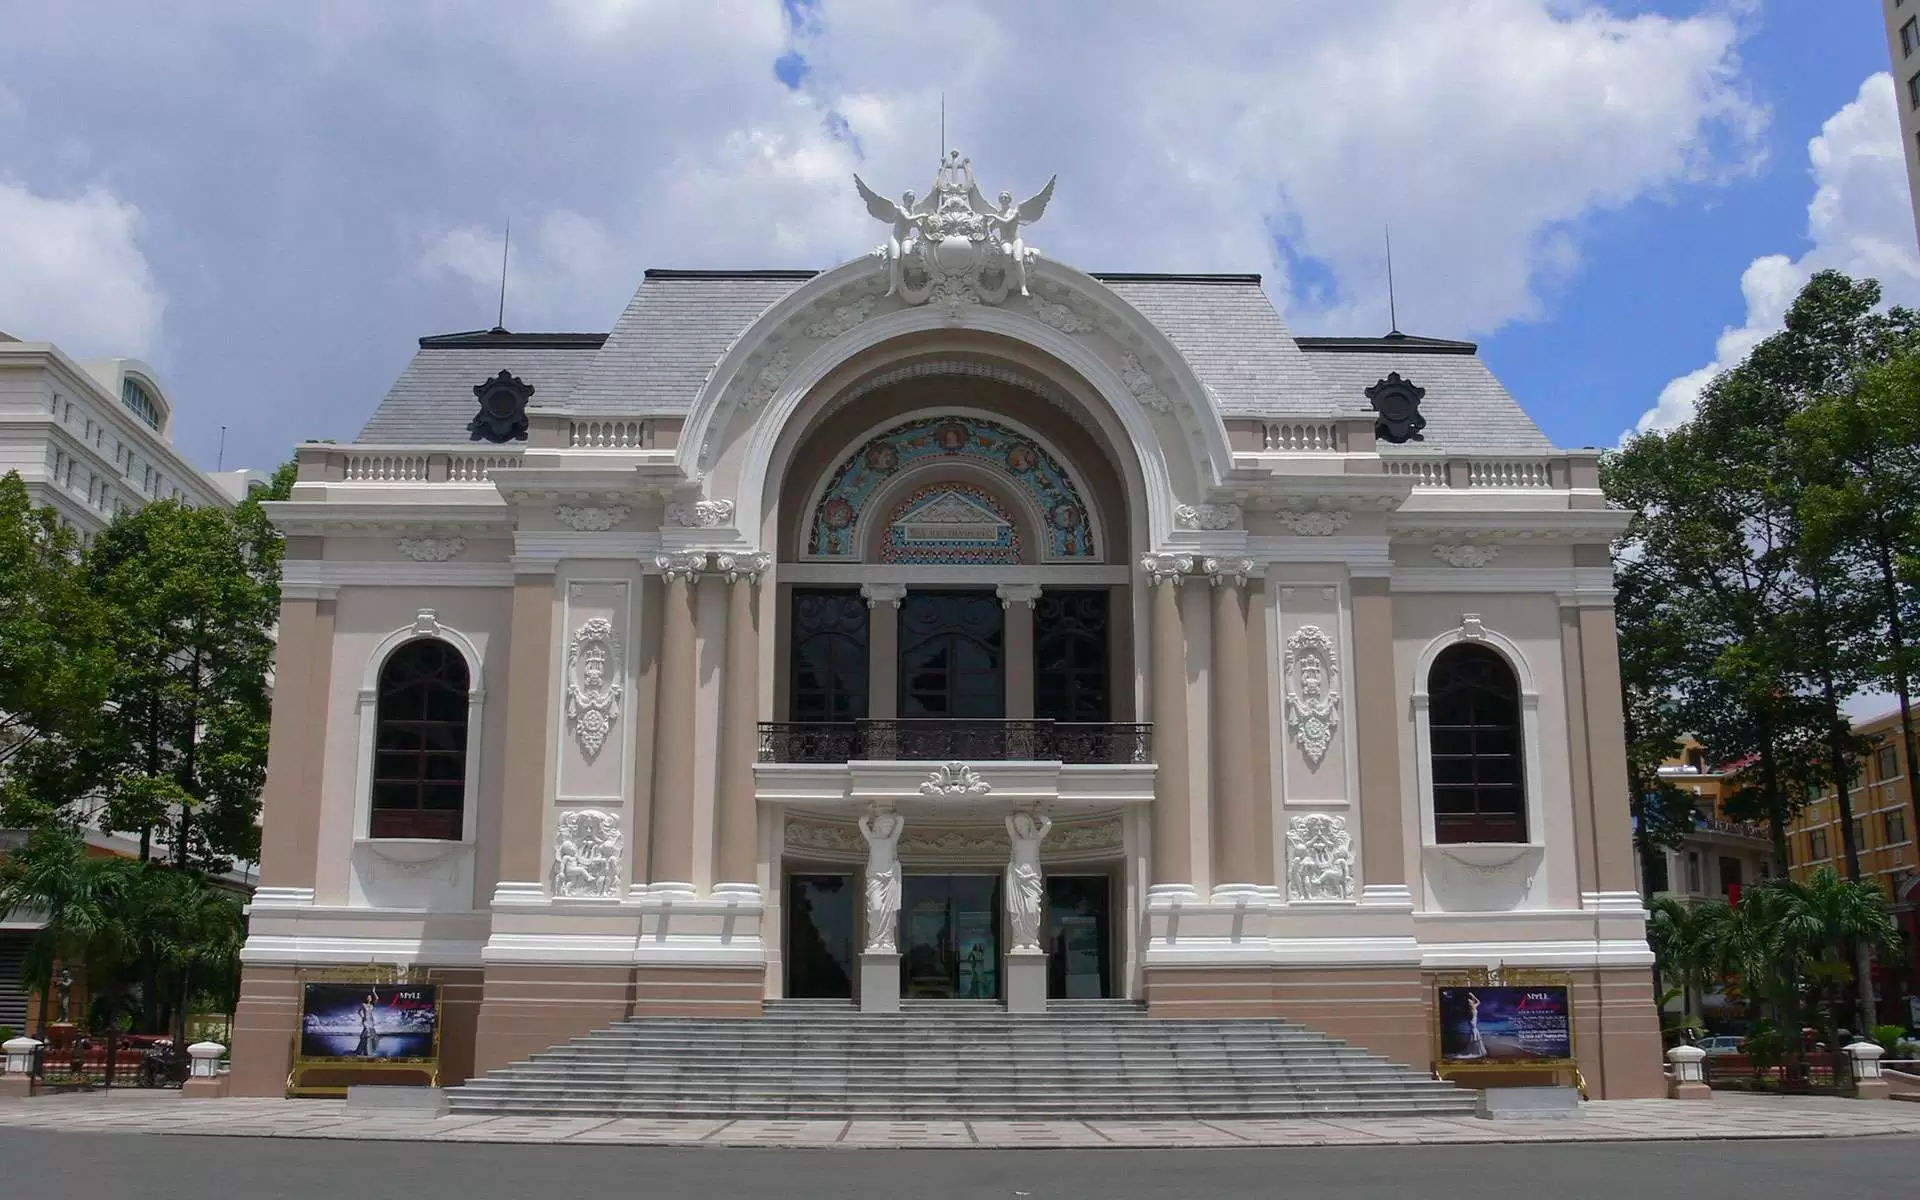 The Municipal Theatre or Saigon Opera House